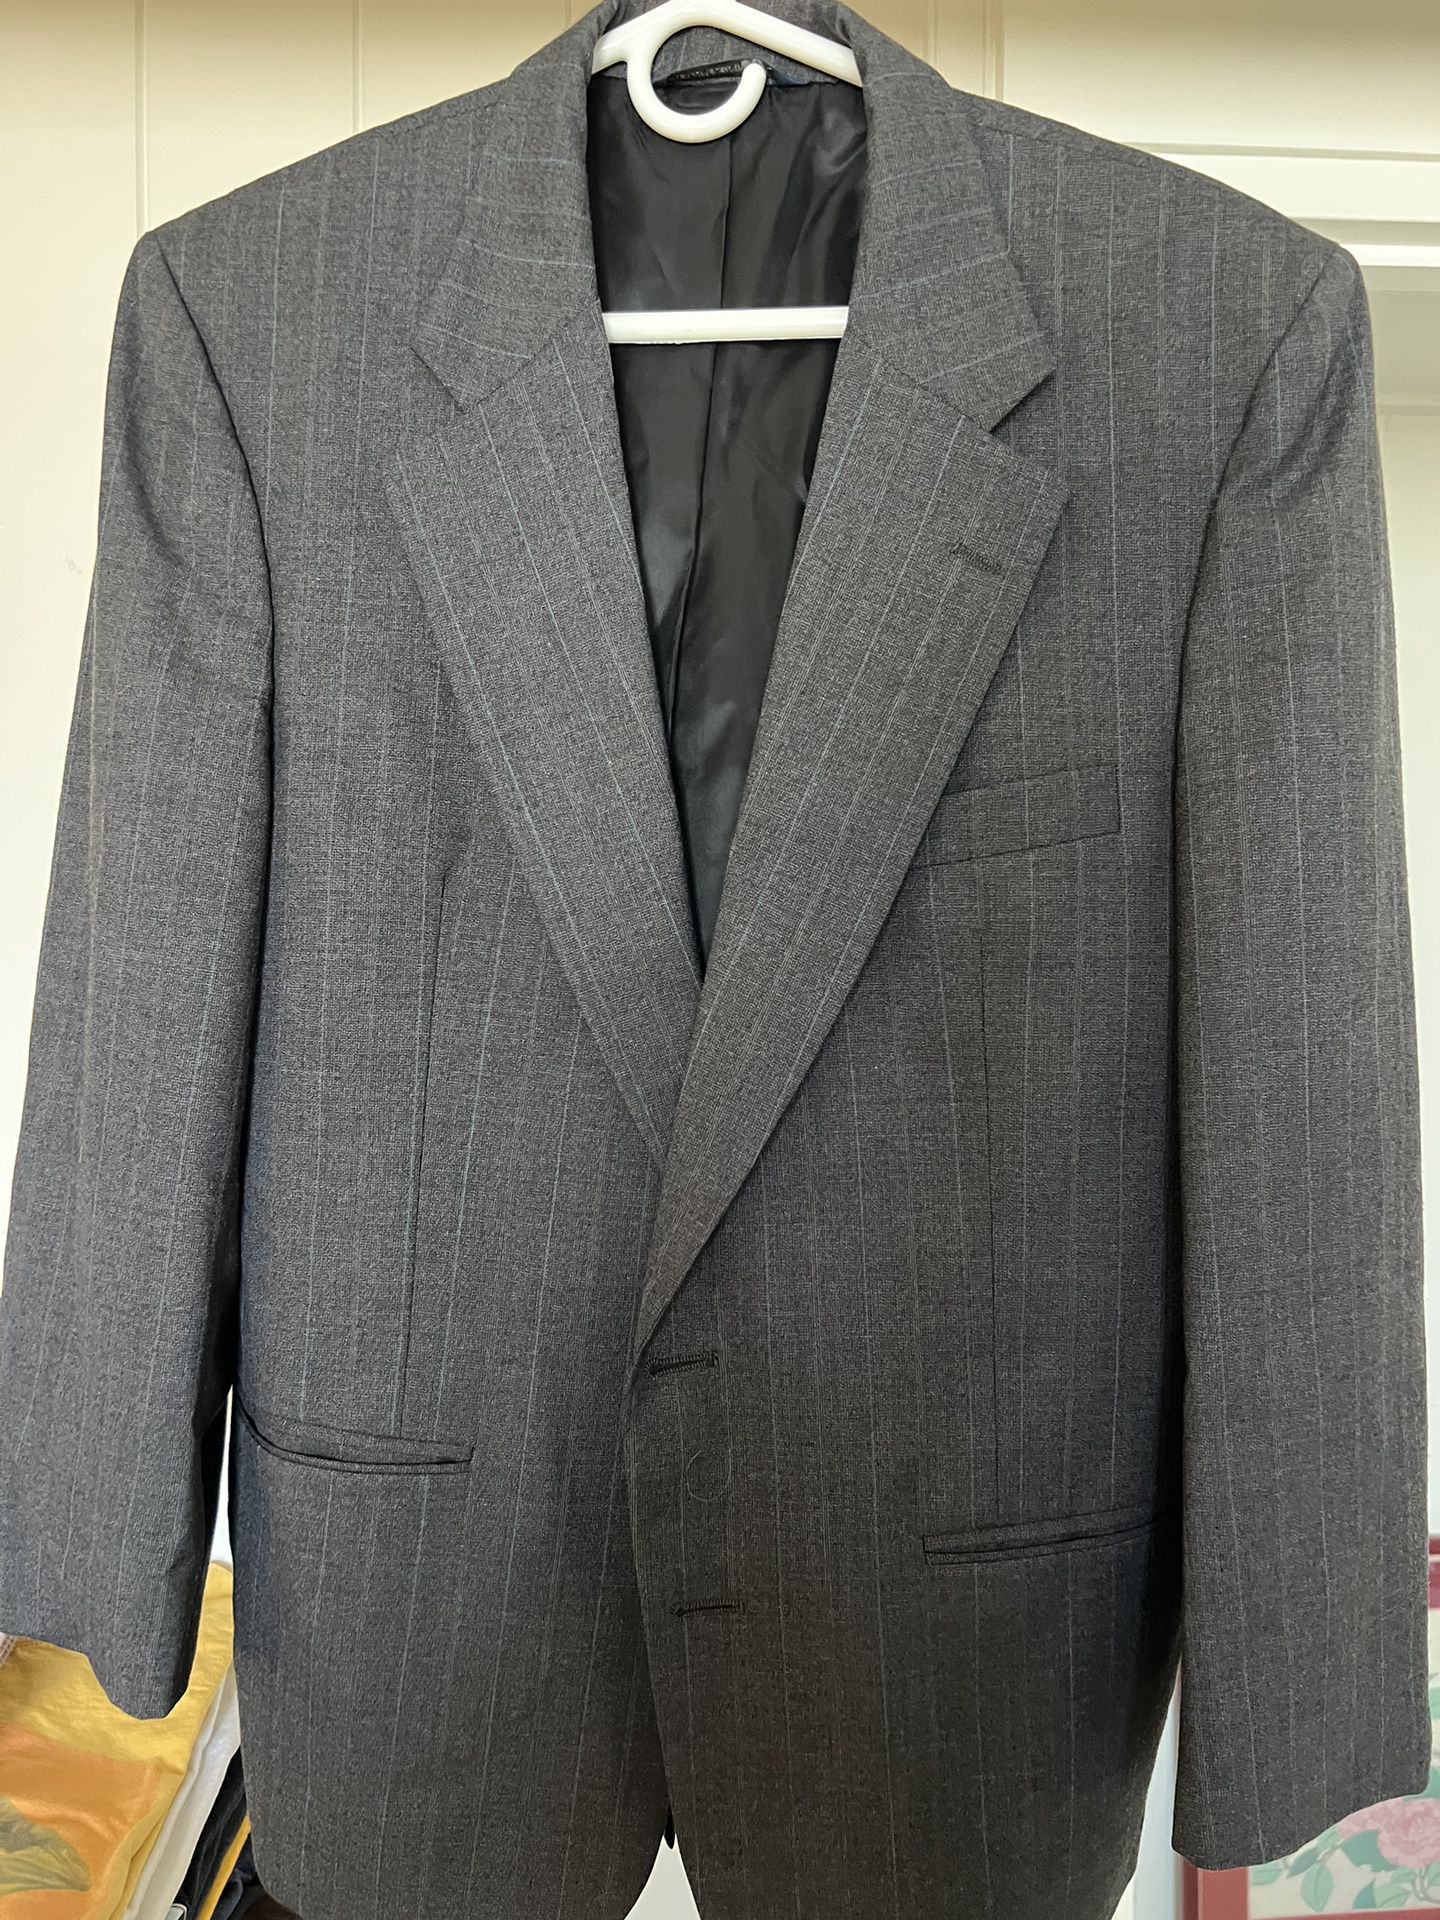 Burberry Liberty House pinstripe vintage suit with slacks